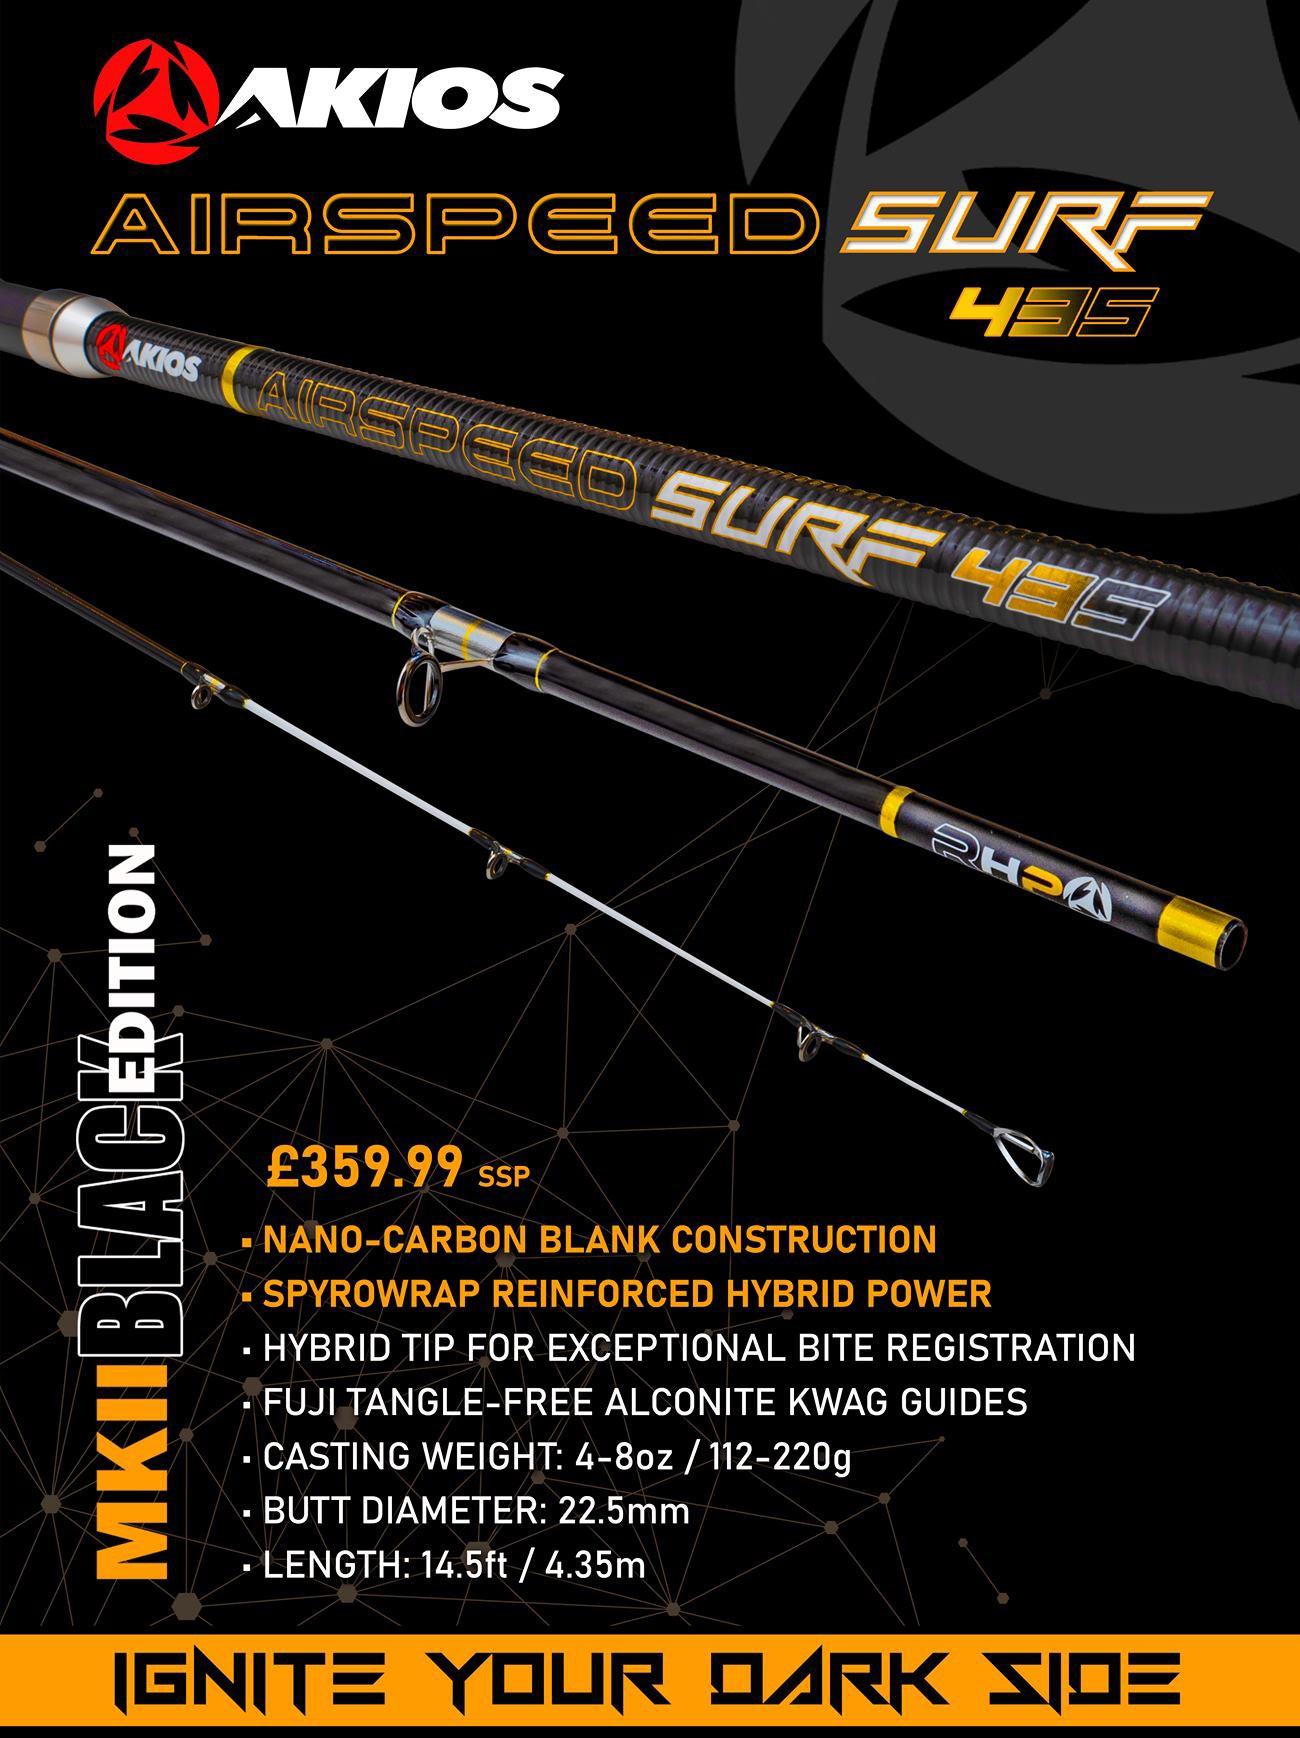 Akios Airspeed Surf 435 Fishing Rod Black Edition